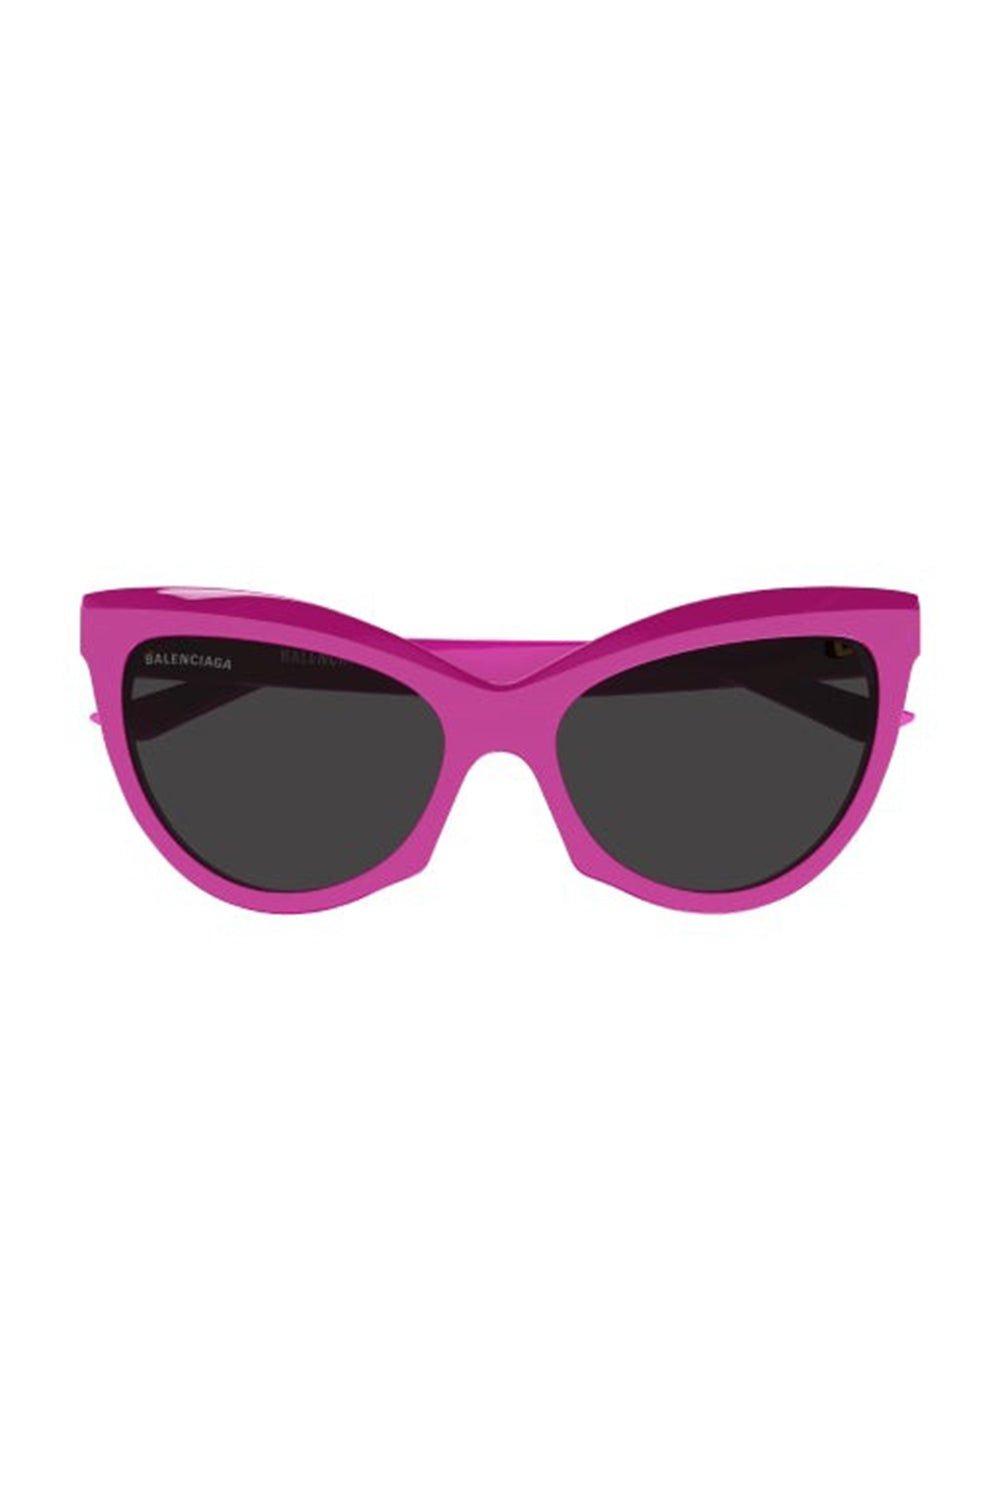 BALENCIAGA-Cat Eye Sunglasses-PINK